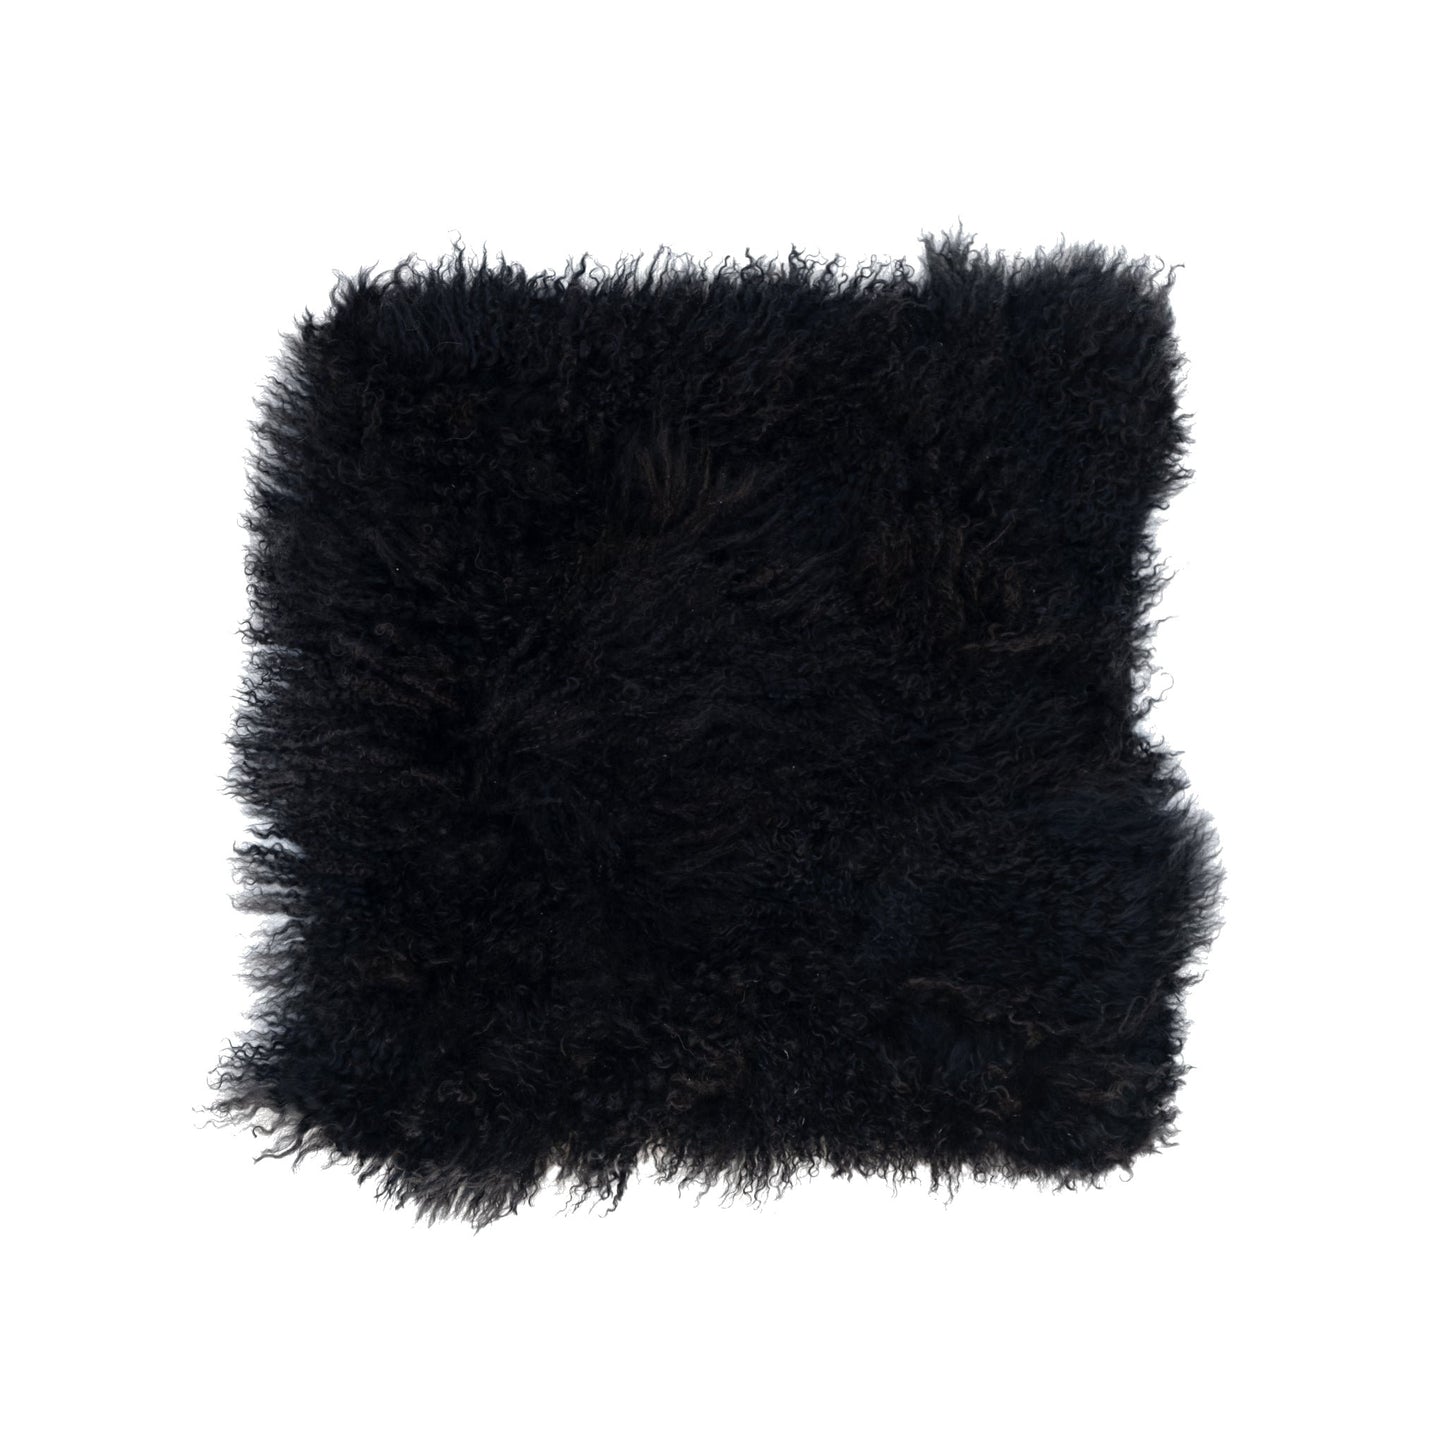 100% Natural Mongolian Sheepskin Cushion Covers - Medium, Black - Naturally Sheepskins